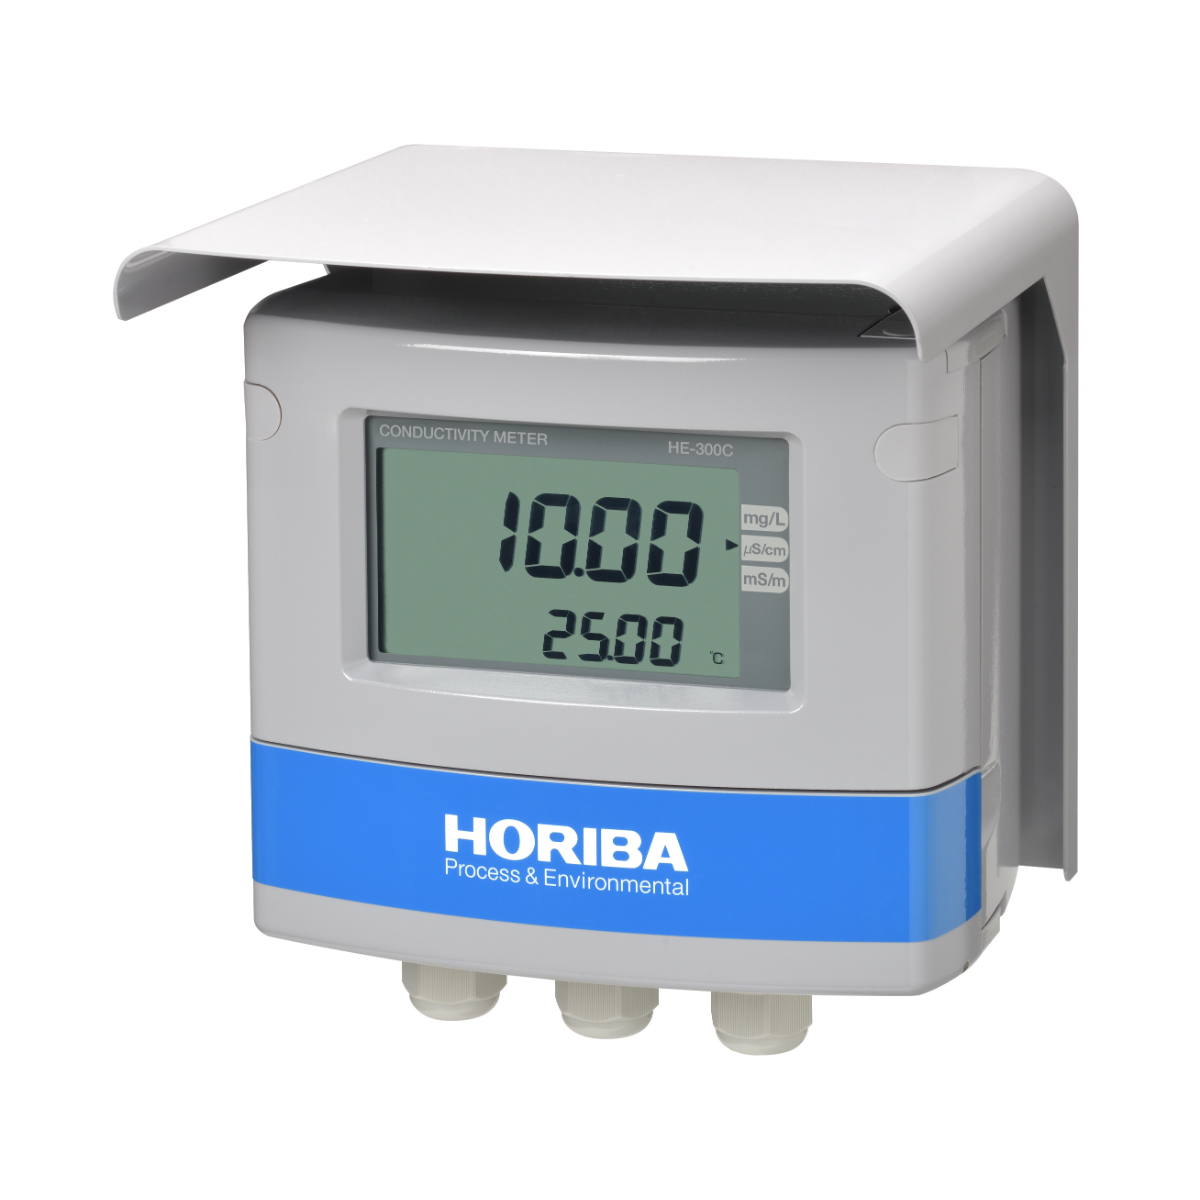 HE-300C 現場形電気伝導率計(導電率計) - HORIBA